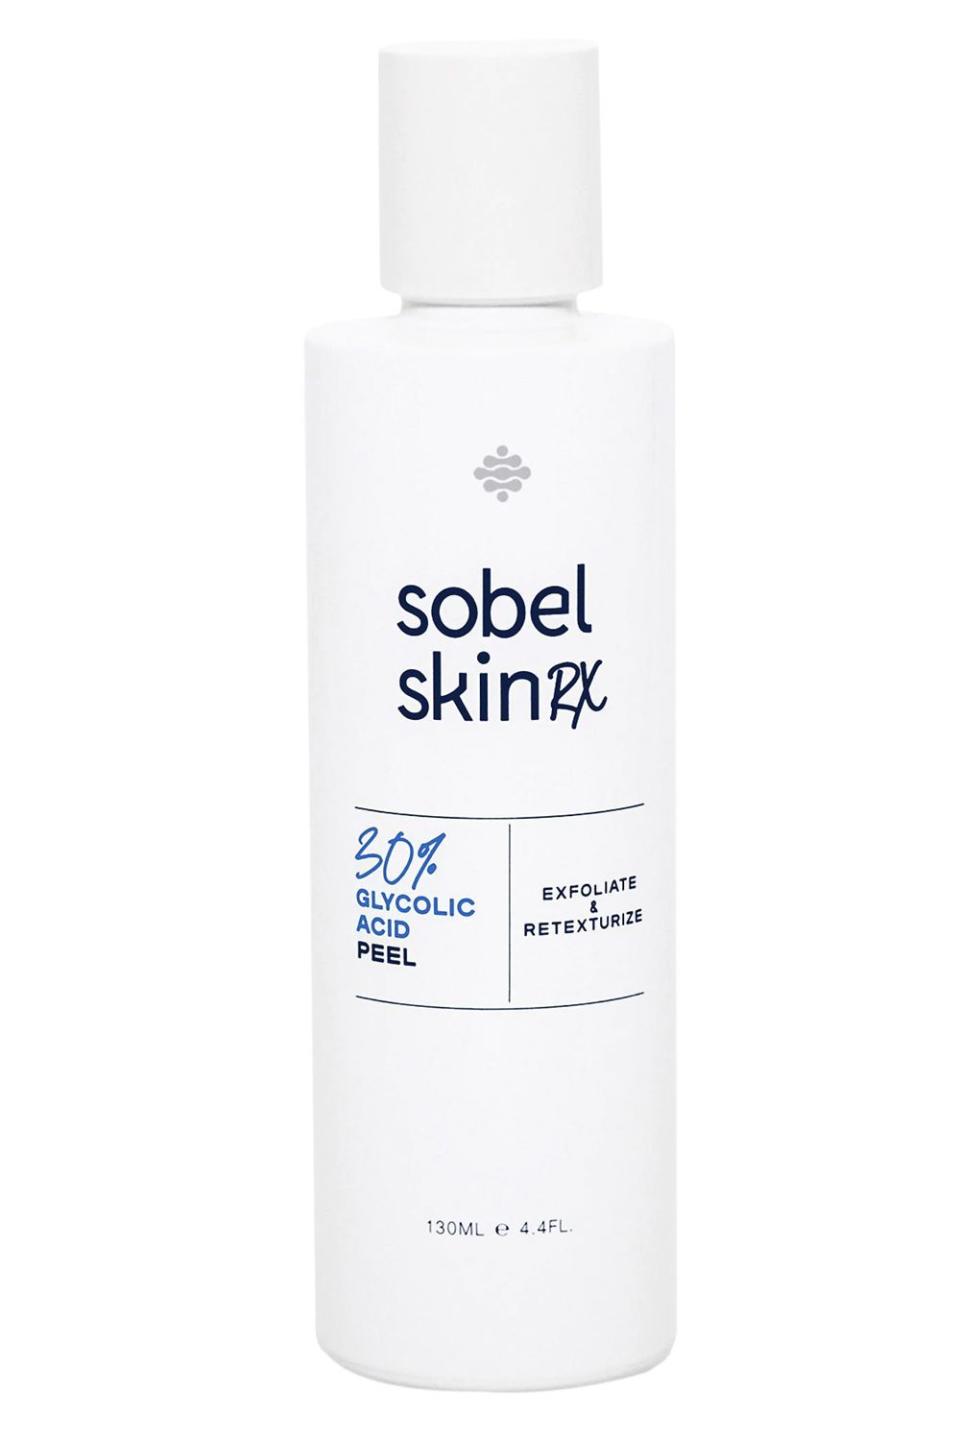 6) Sobel Skin Rx 30% Glycolic Acid Peel